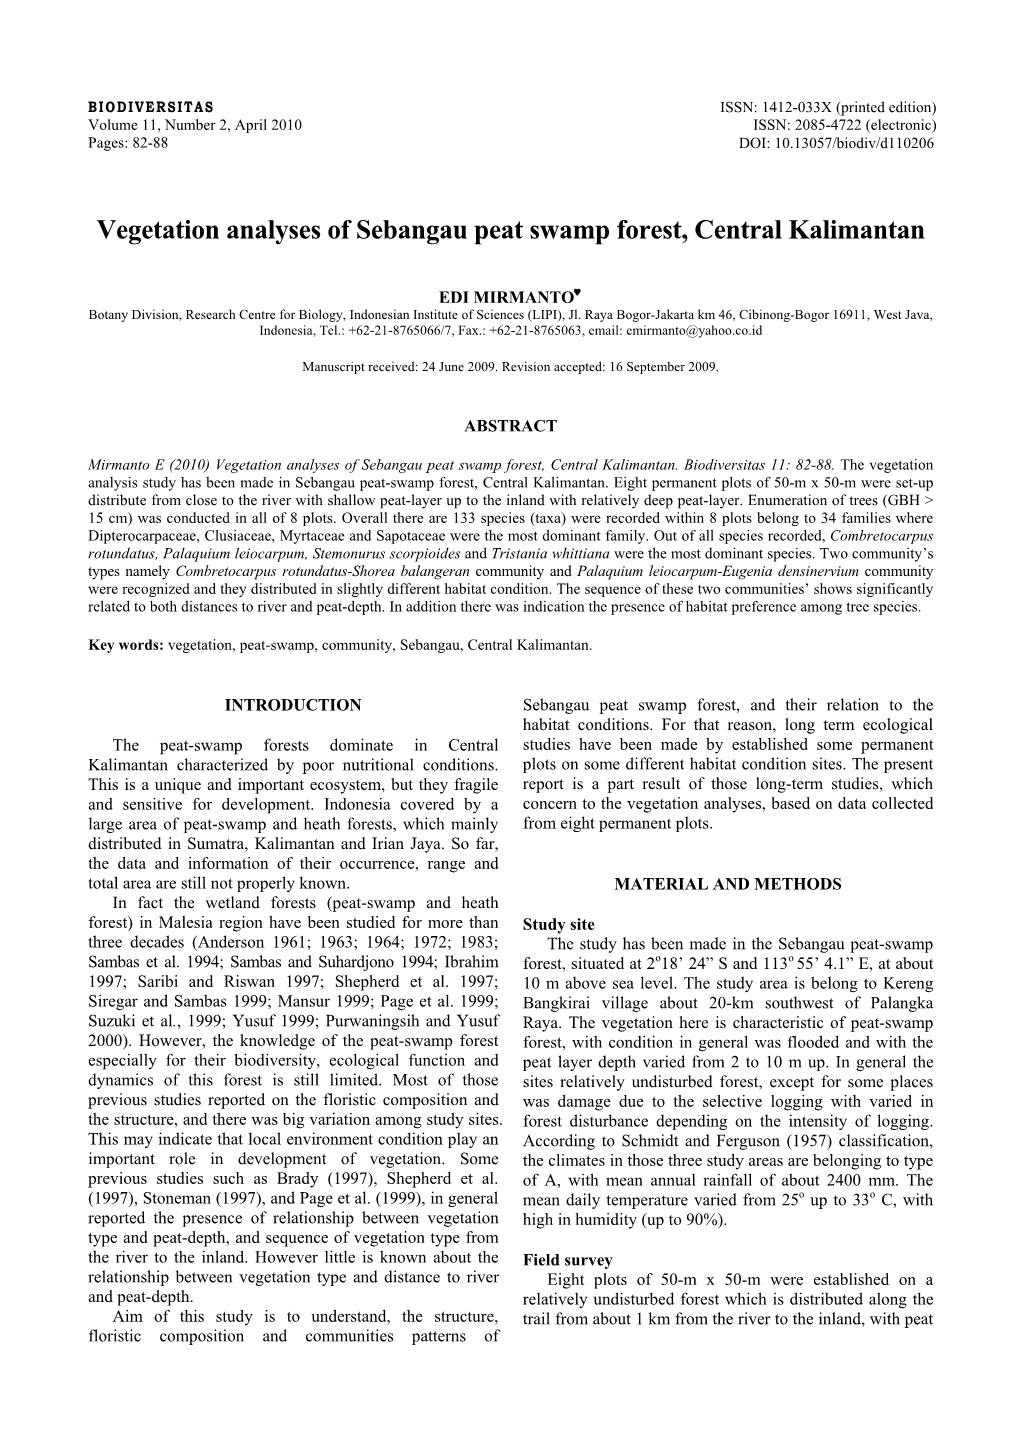 Vegetation Analyses of Sebangau Peat Swamp Forest, Central Kalimantan